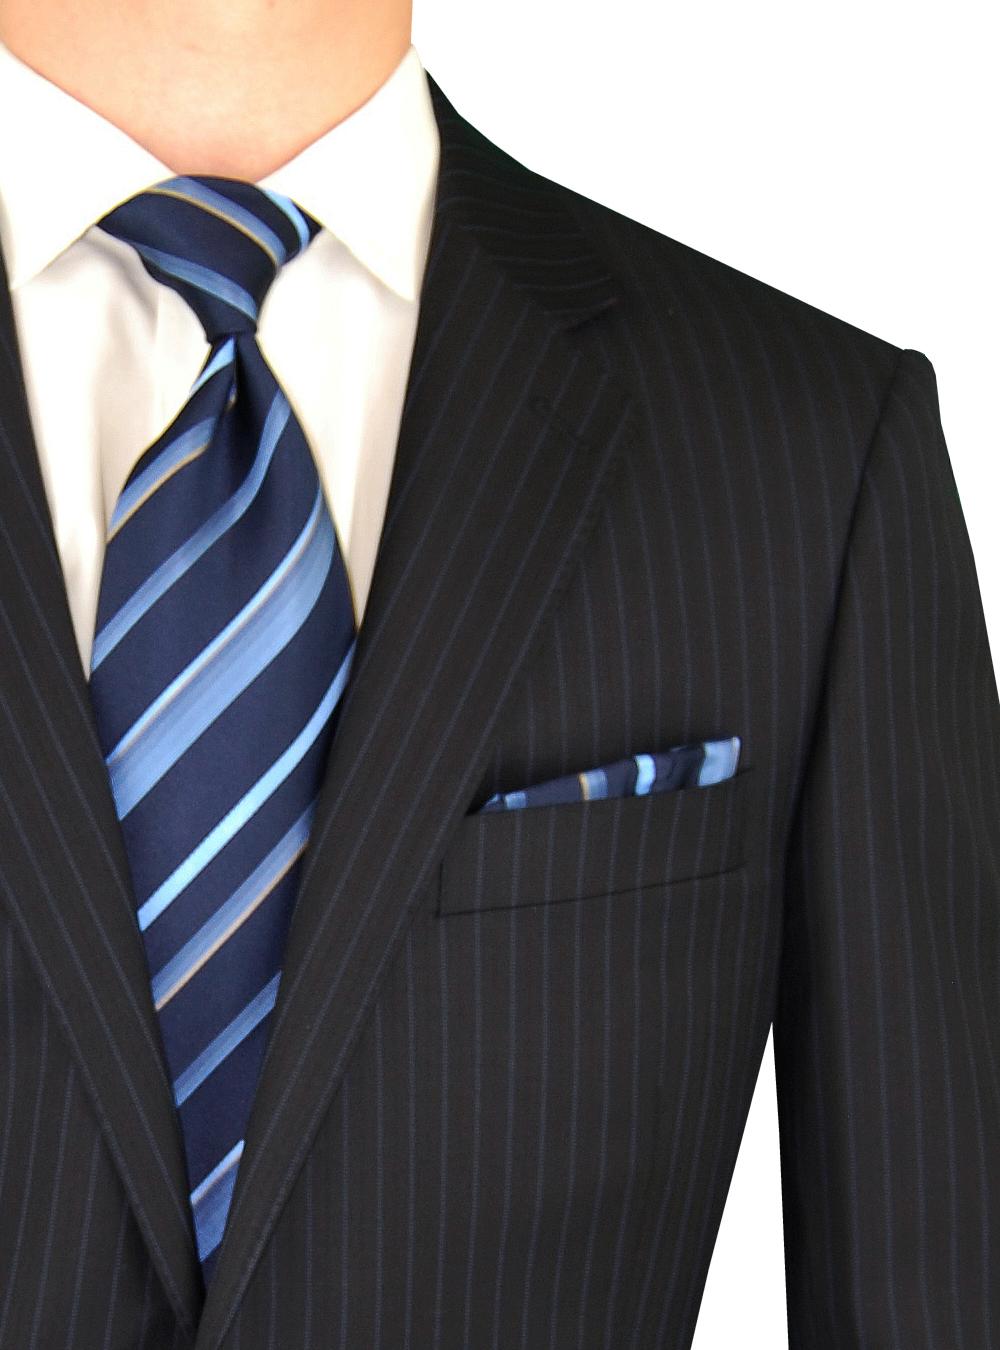 LN LUCIANO NATAZZI Italian Men's Suit 160'S Canali Cashmere Wool 2 Button Stripe Navy Stripe - image 2 of 5